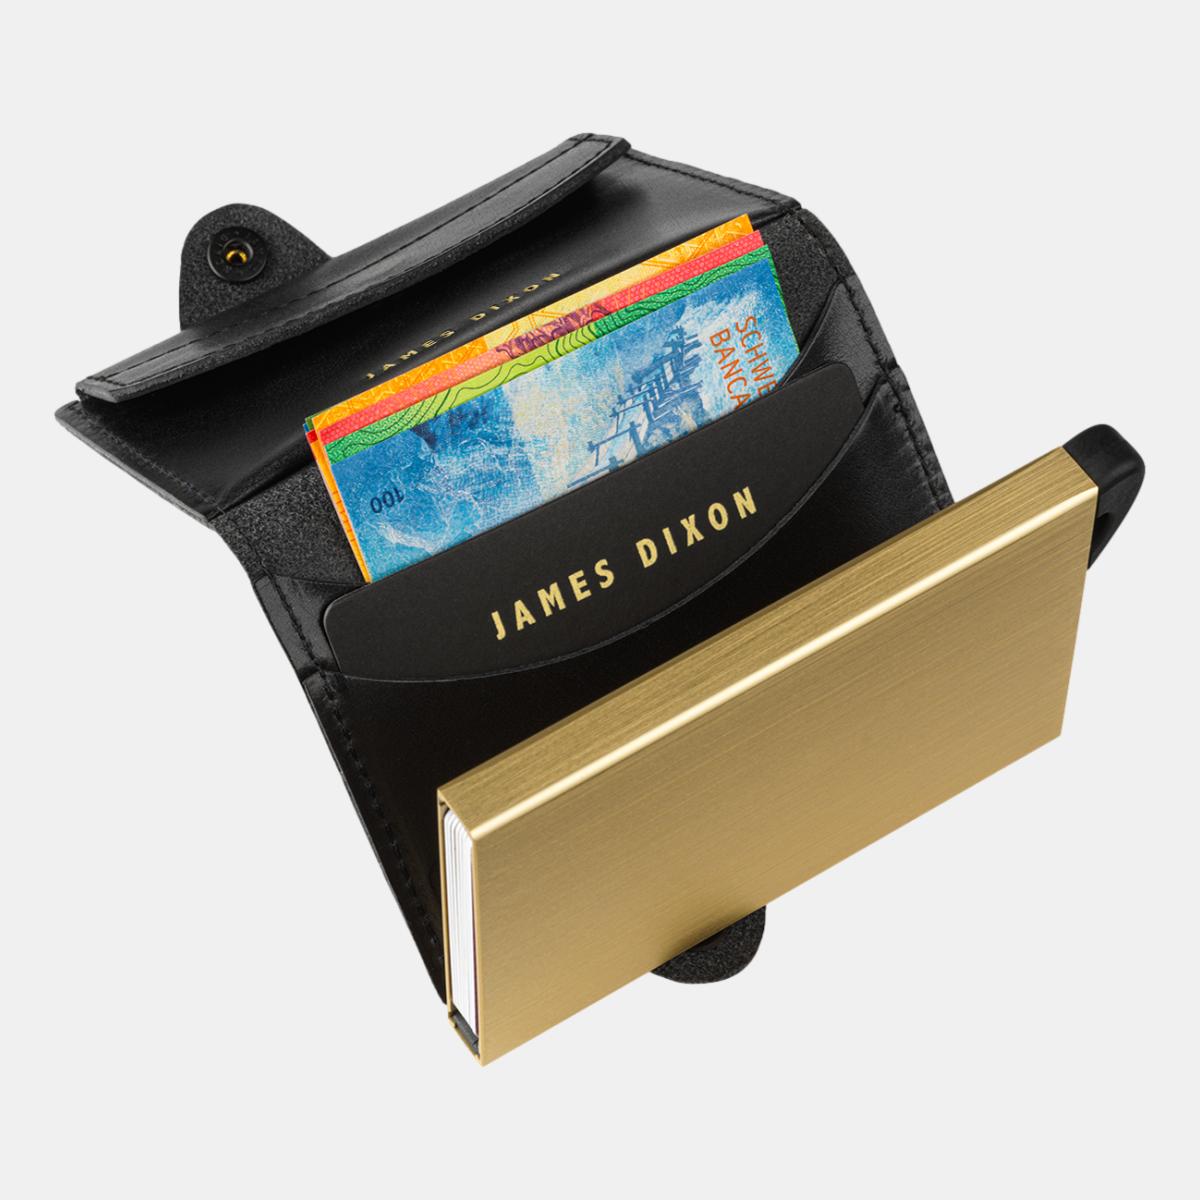 jd0074 james dixon boton classic black gold coin pocket wallet notes